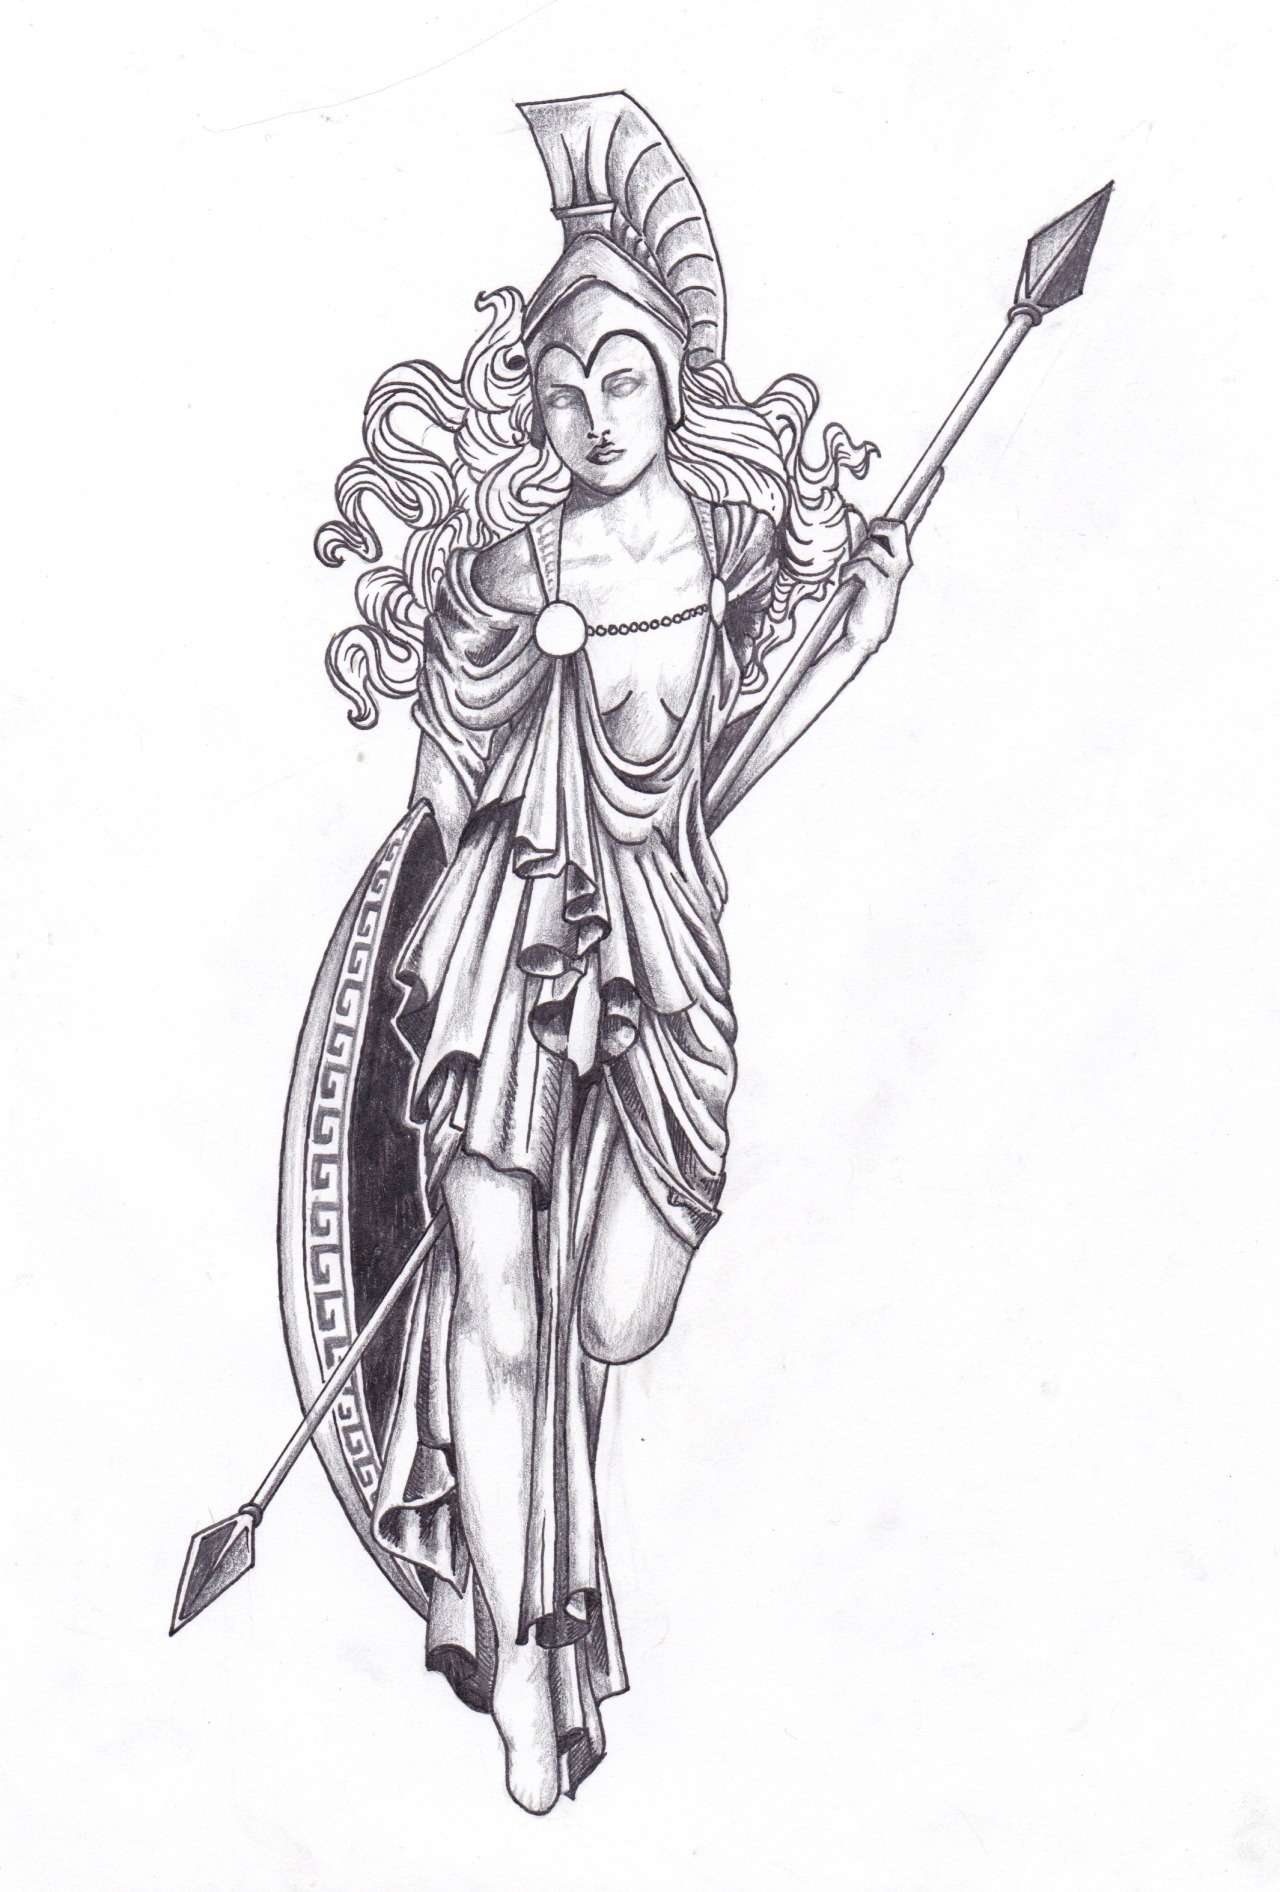 Athena statue tattoo design for a friend.